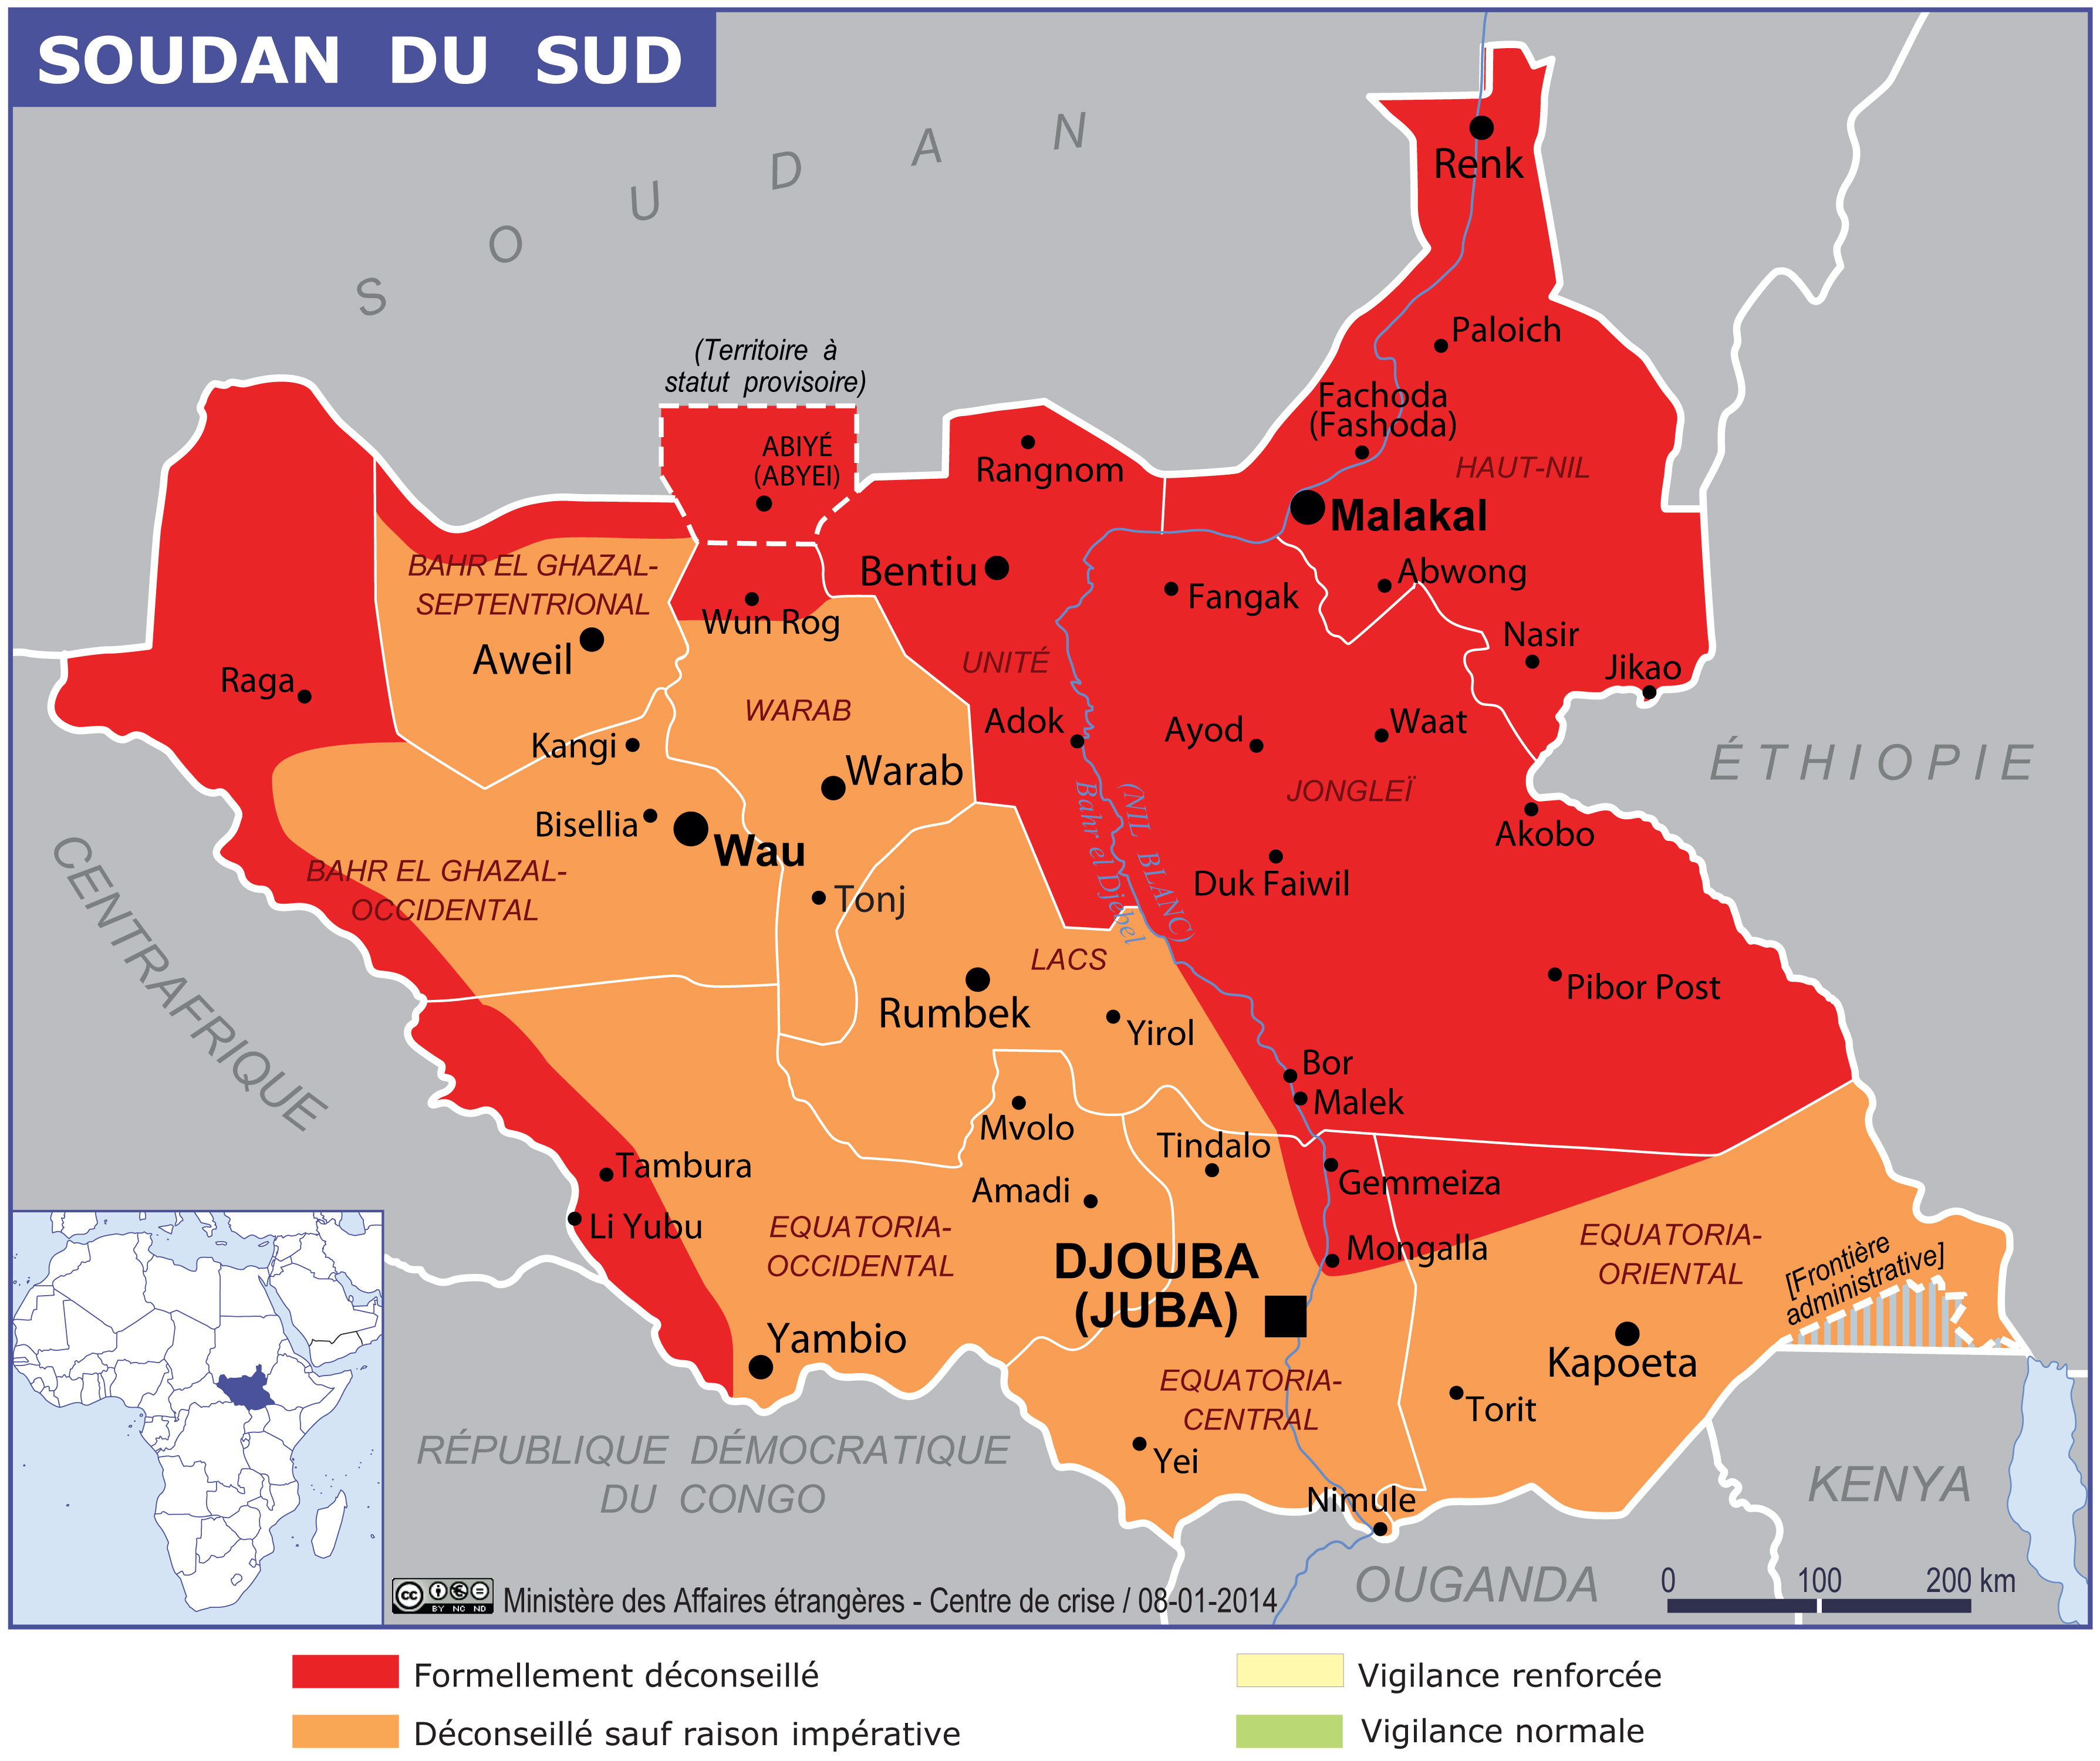 http://www.diplomatie.gouv.fr/fr/IMG/jpg/06-01-2014_Soudan_du_Sud_FCV_proposition_HD_cle836eca.jpg